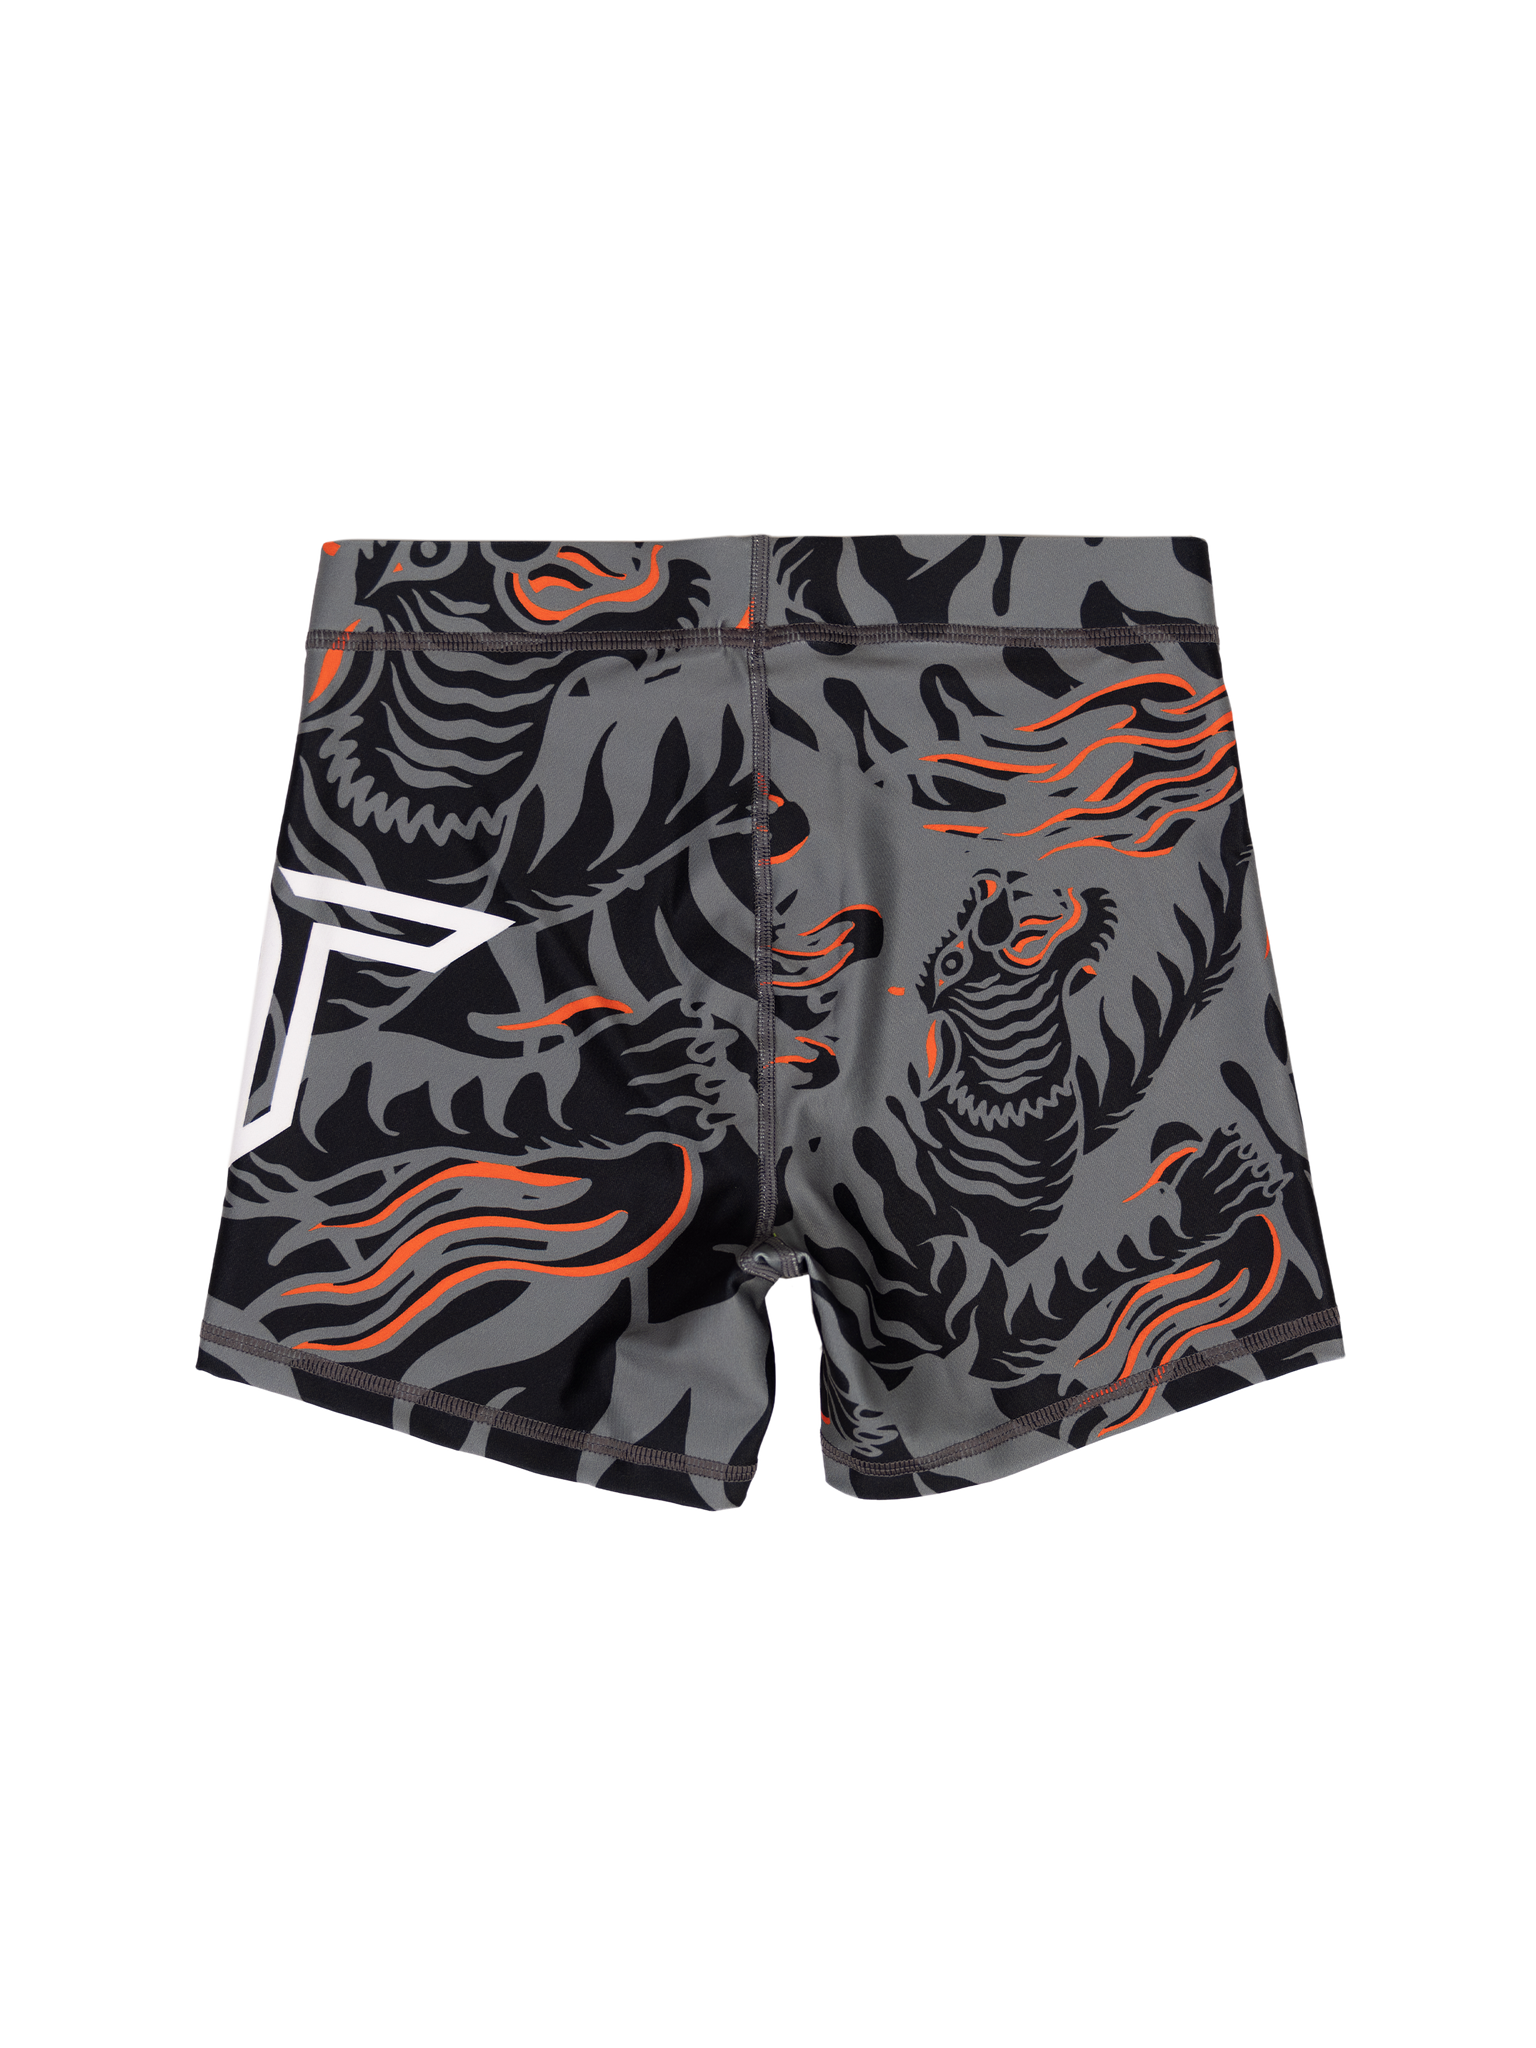 'Tiger Fight' Women's Compression Shorts - Fire Grey (4" Inseam)